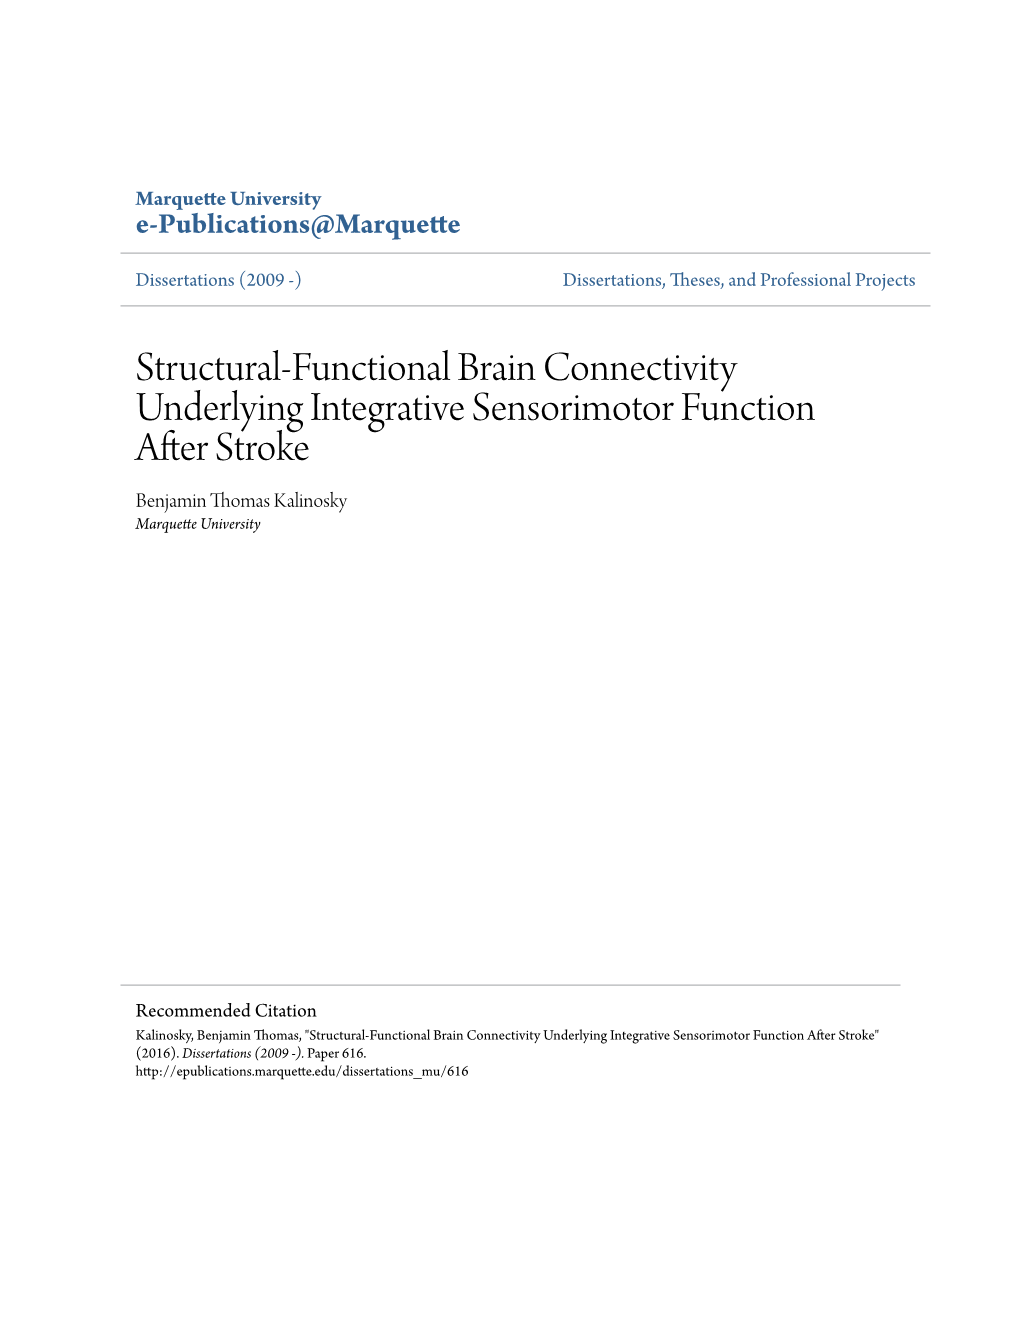 Structural-Functional Brain Connectivity Underlying Integrative Sensorimotor Function After Stroke Benjamin Thomas Kalinosky Marquette University